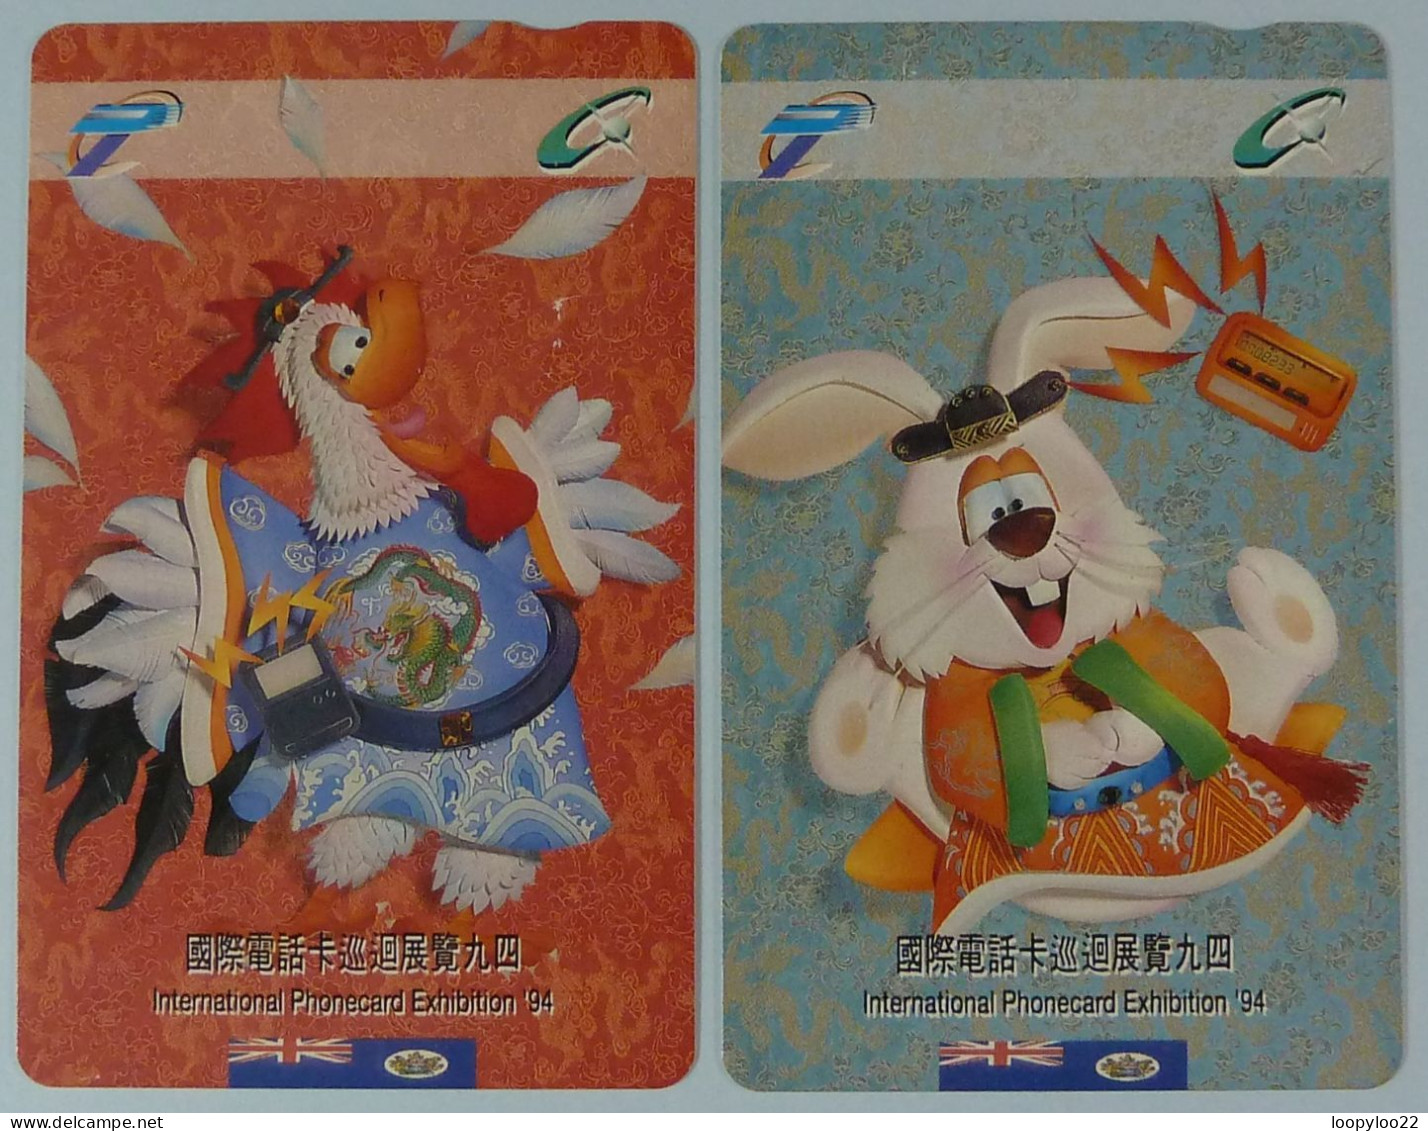 HONG KONG - Autelca - Zodiac Rabbit And Rooster - International Phonecard Exhibition '94 - Mint - Hong Kong